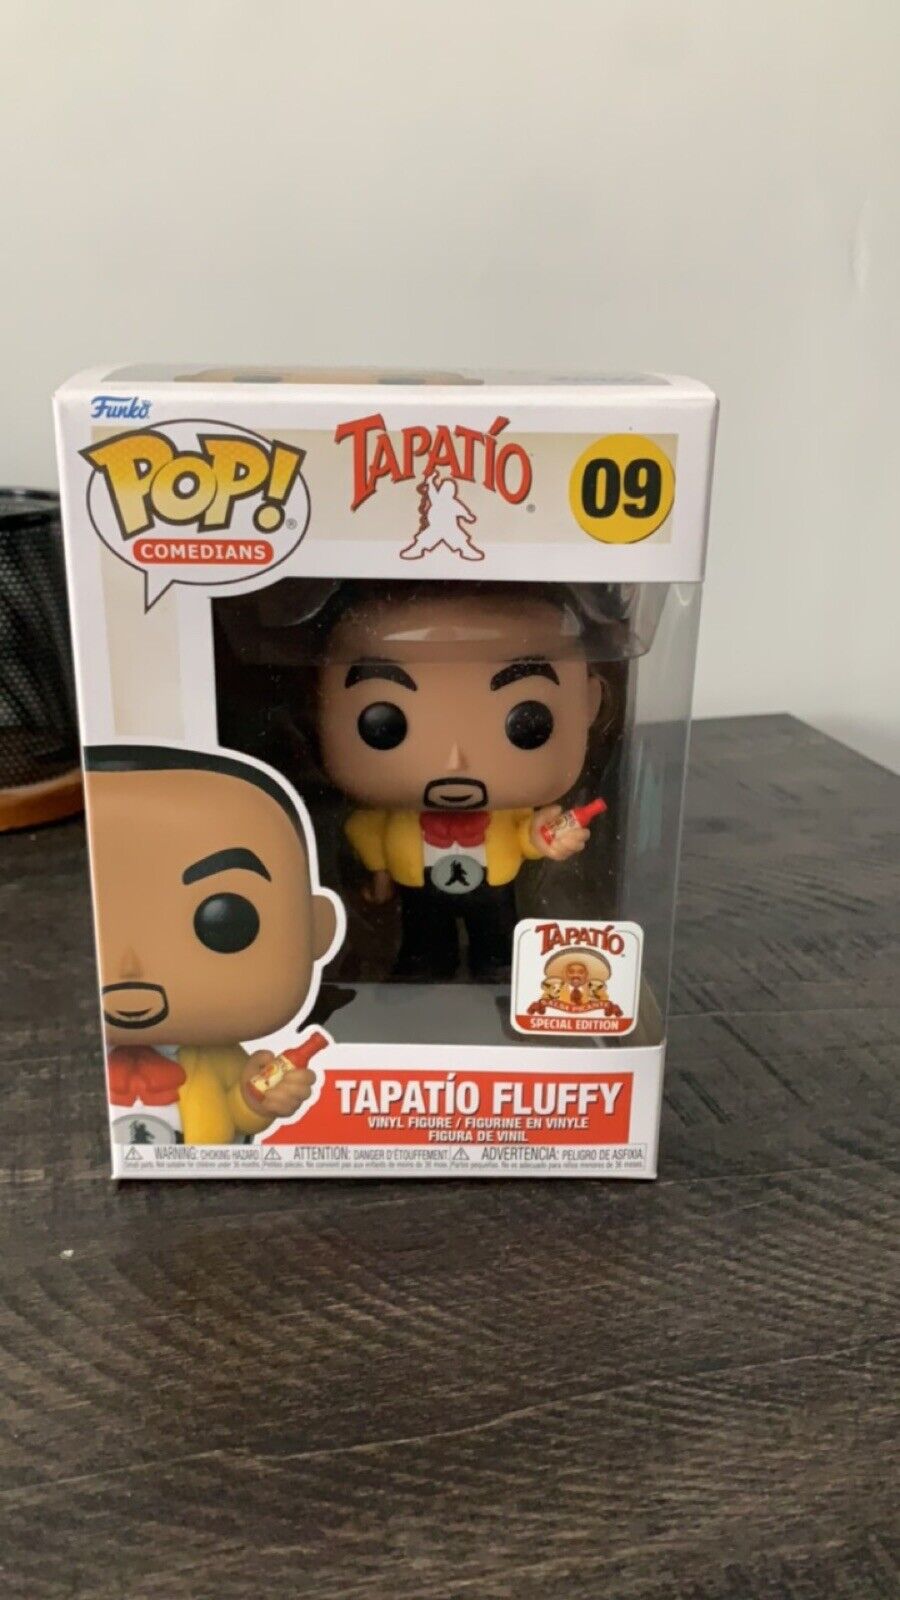 Funko Pop Comedians Tapatio 09 Tapatio Fluffy Exclusive Fluffy Shop